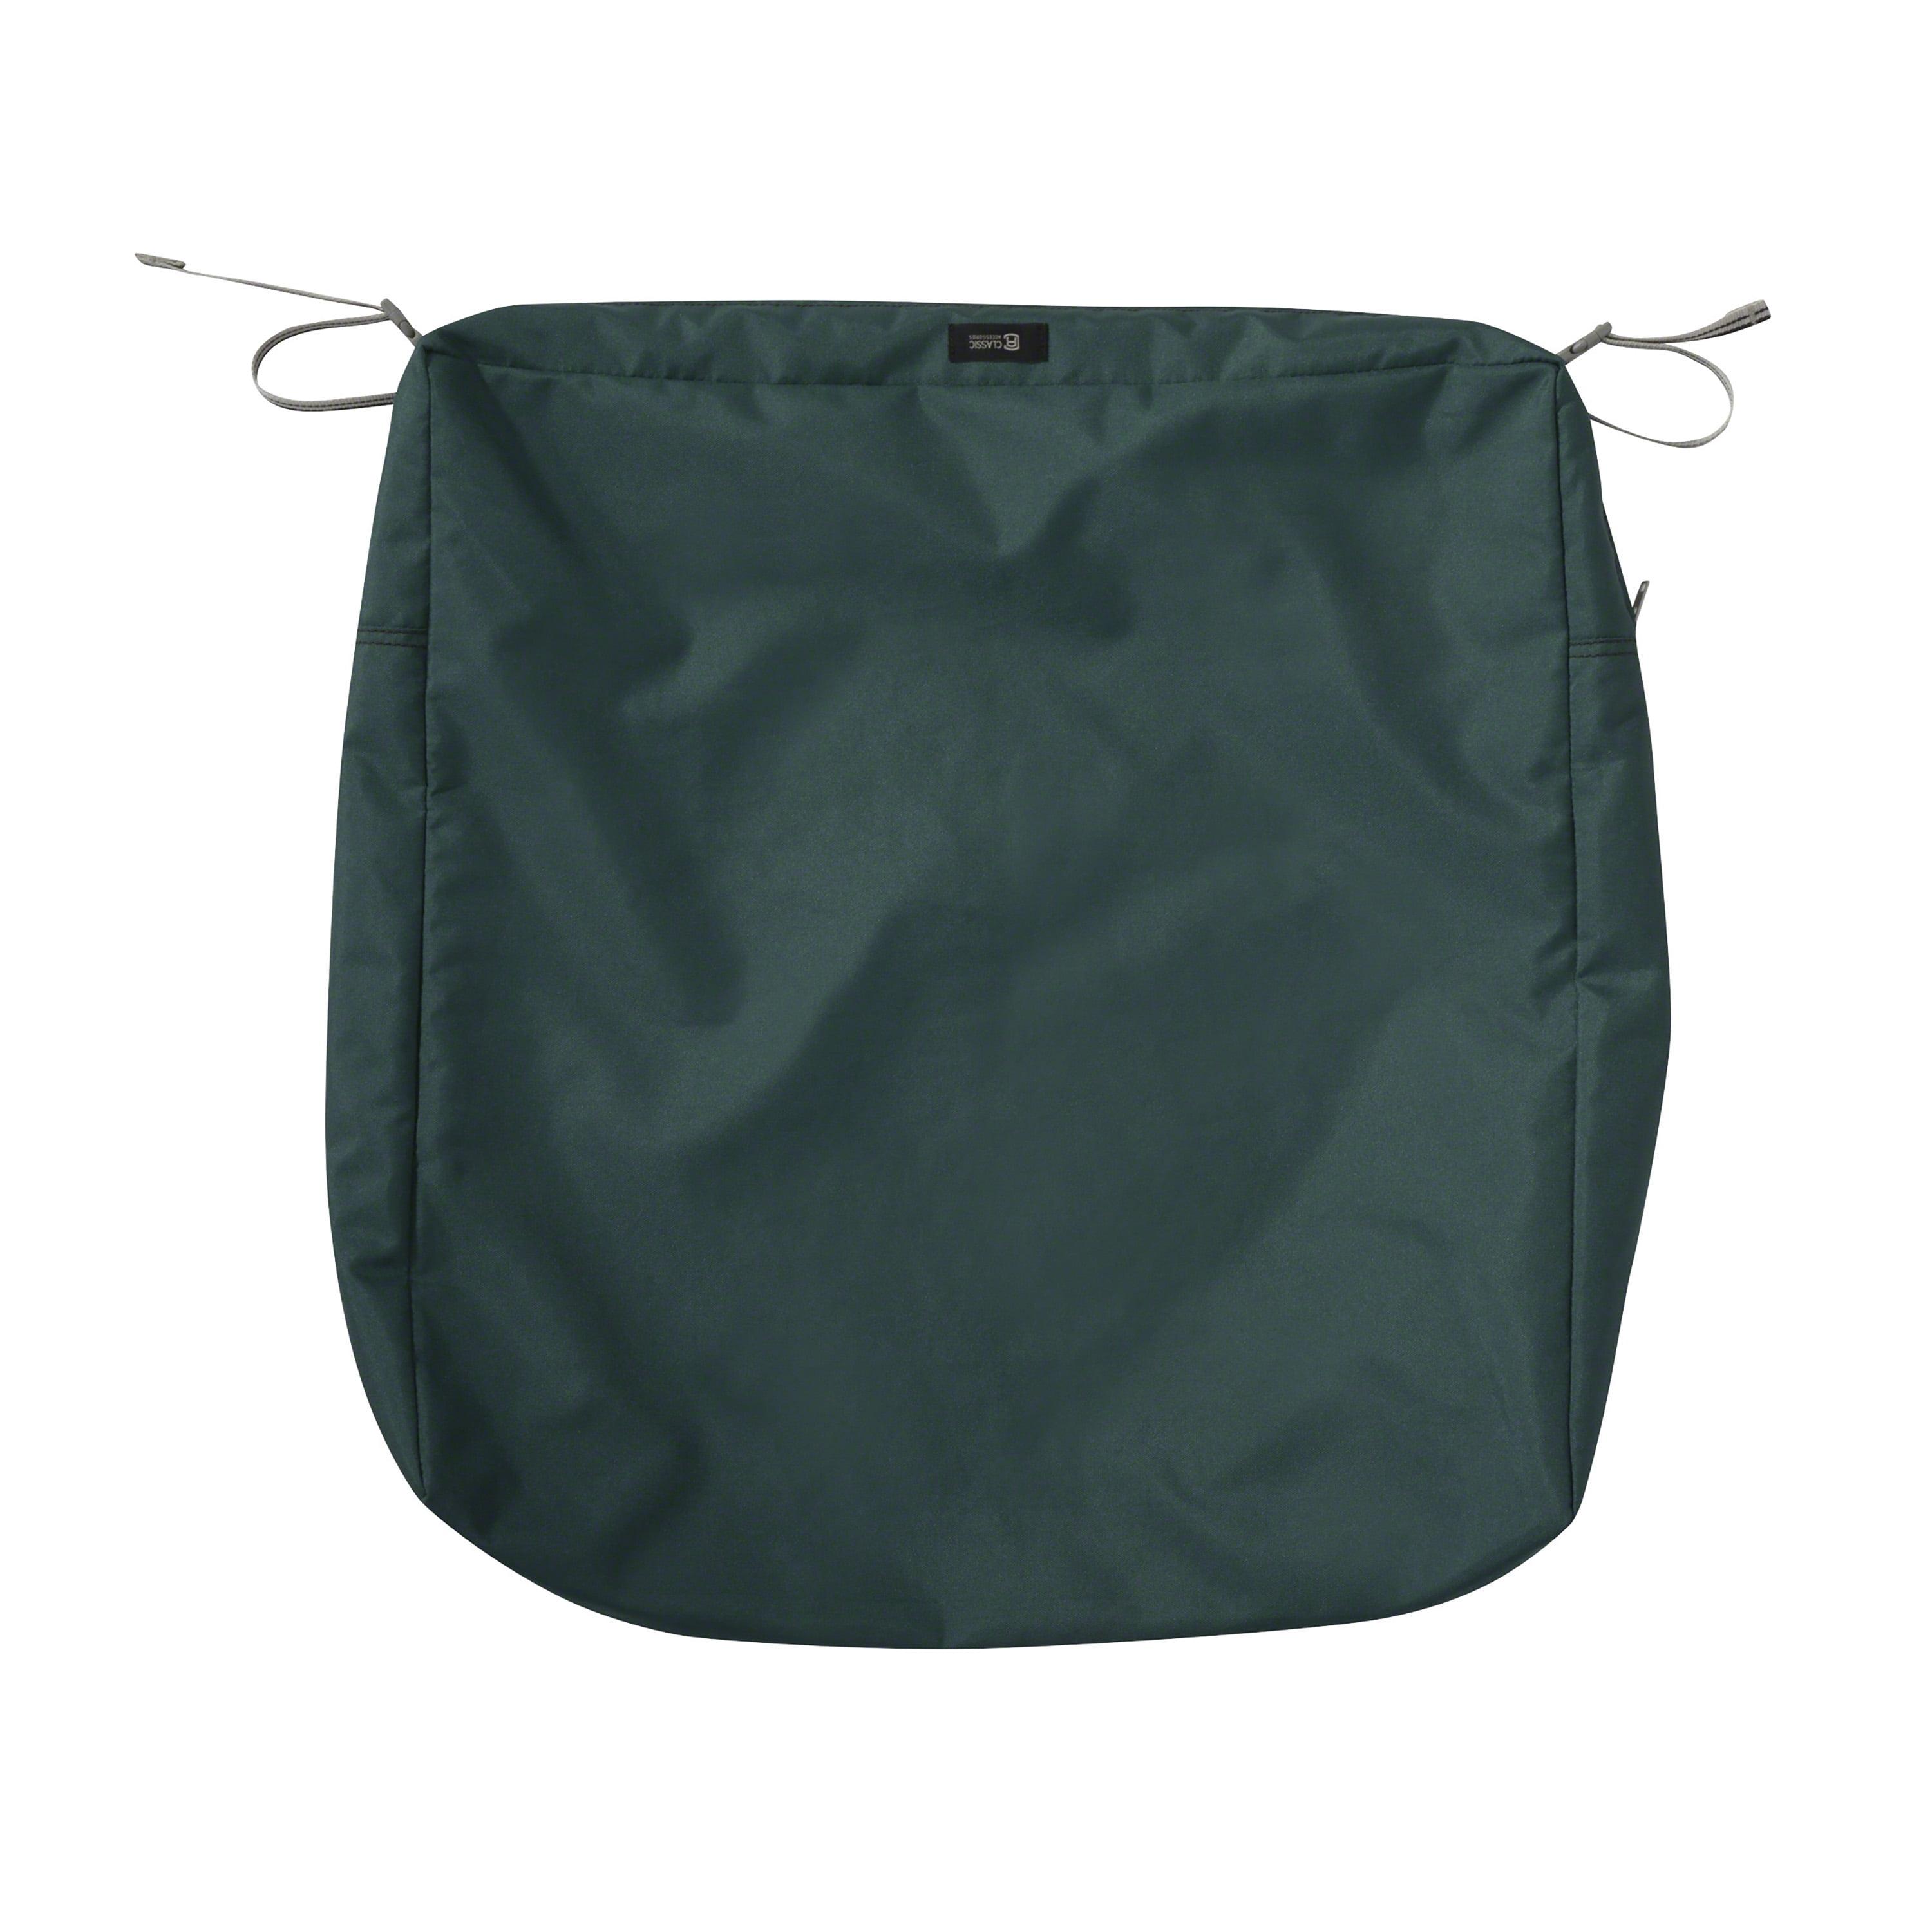 Mallard Green Water-Resistant Square Patio Cushion Cover, 23x23x5 inch